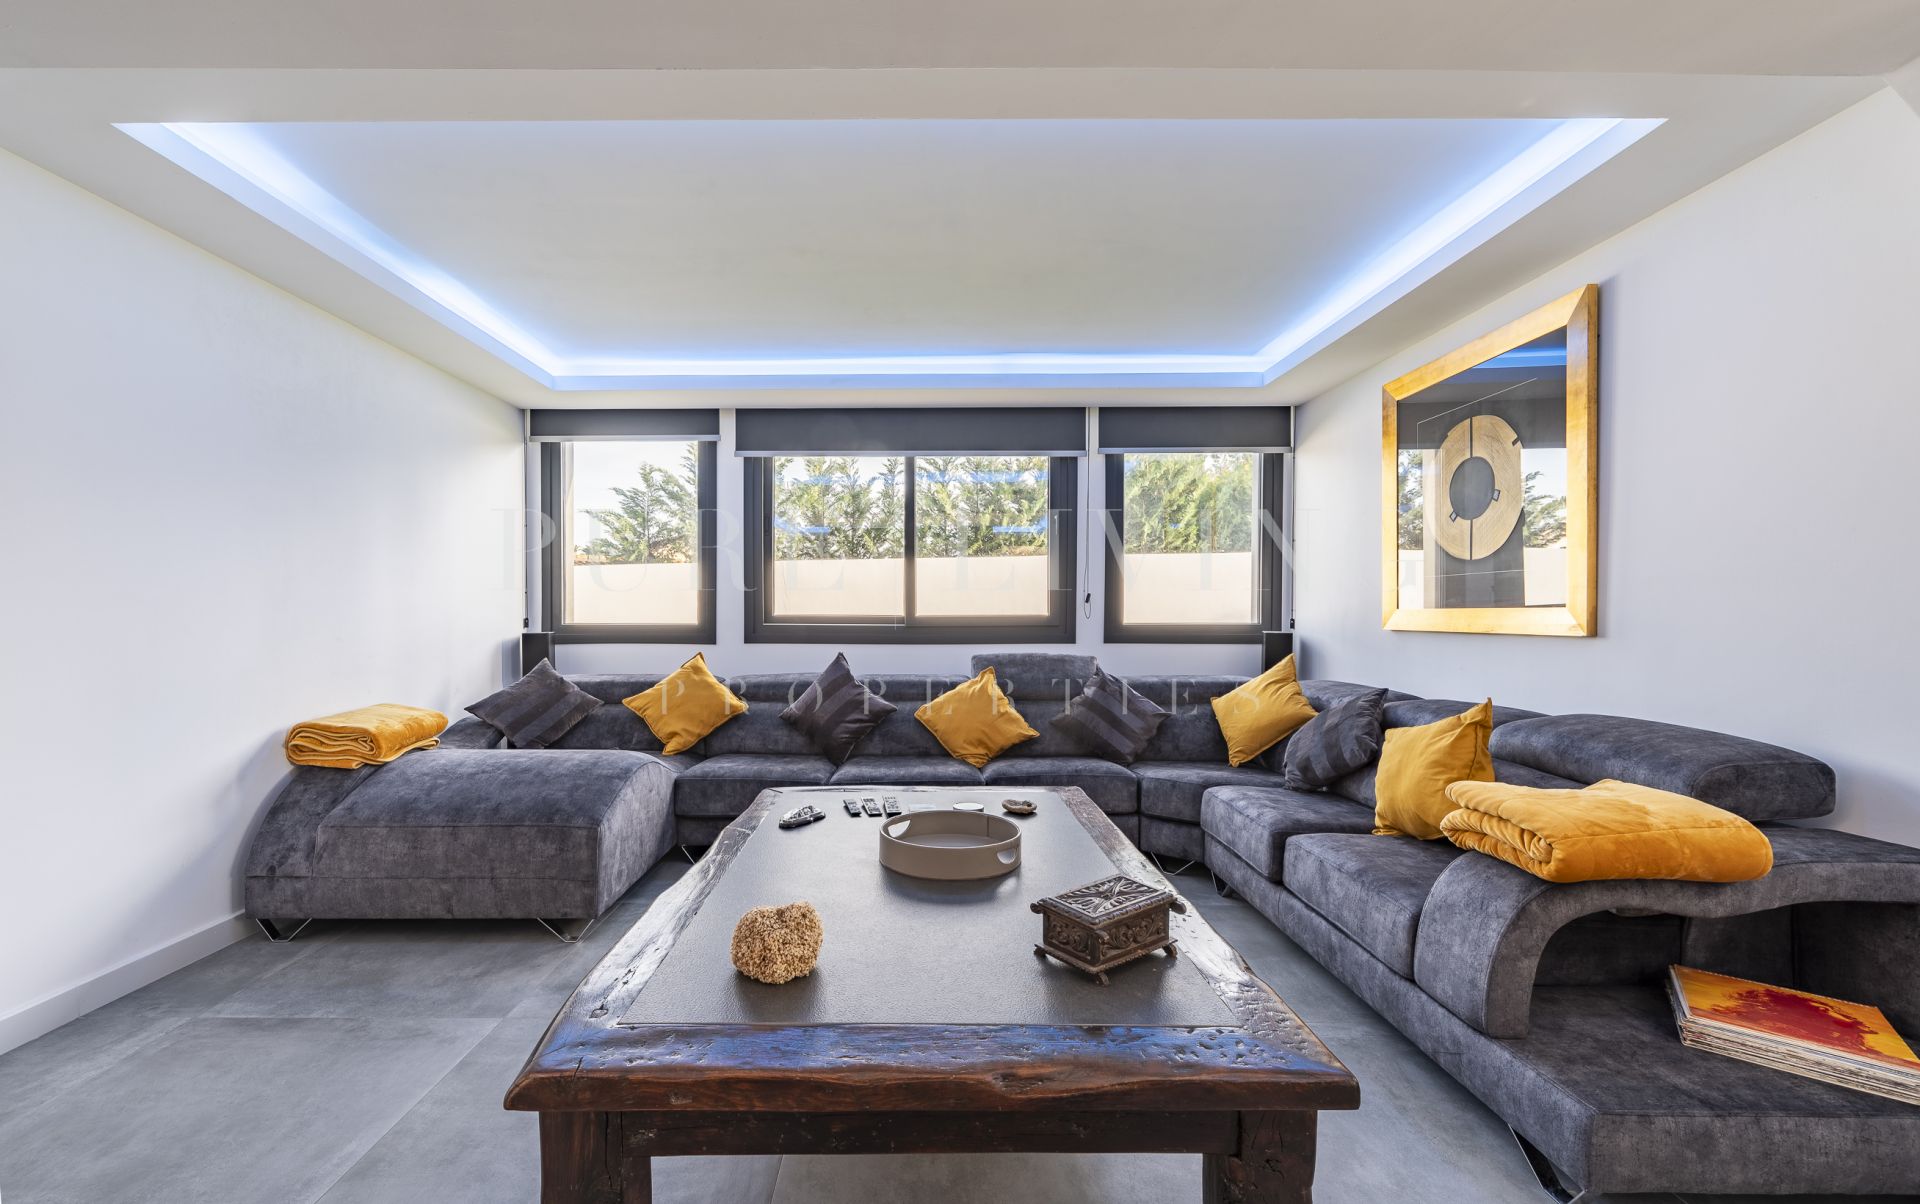 Exceptionally renovated three bedroom villa, superbly located on the beachside in San Pedro de Alcántara